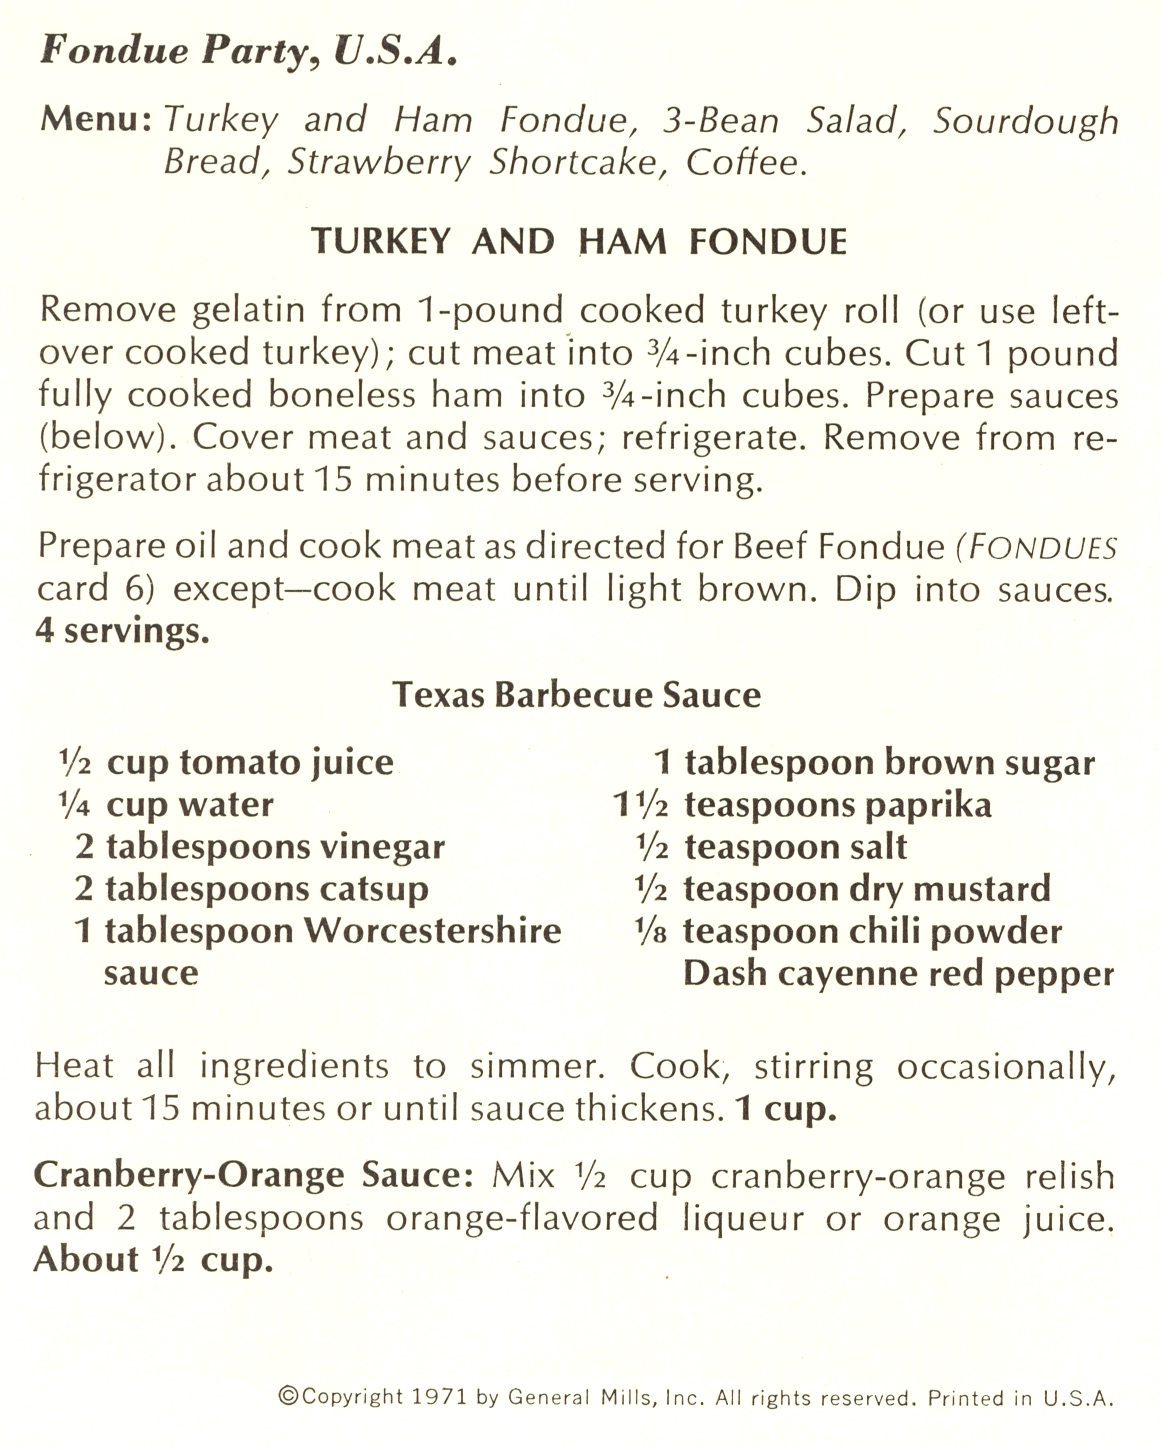 1971 Betty Crocker Recipe Library - Fondues: Fondue Party, U.S.A.